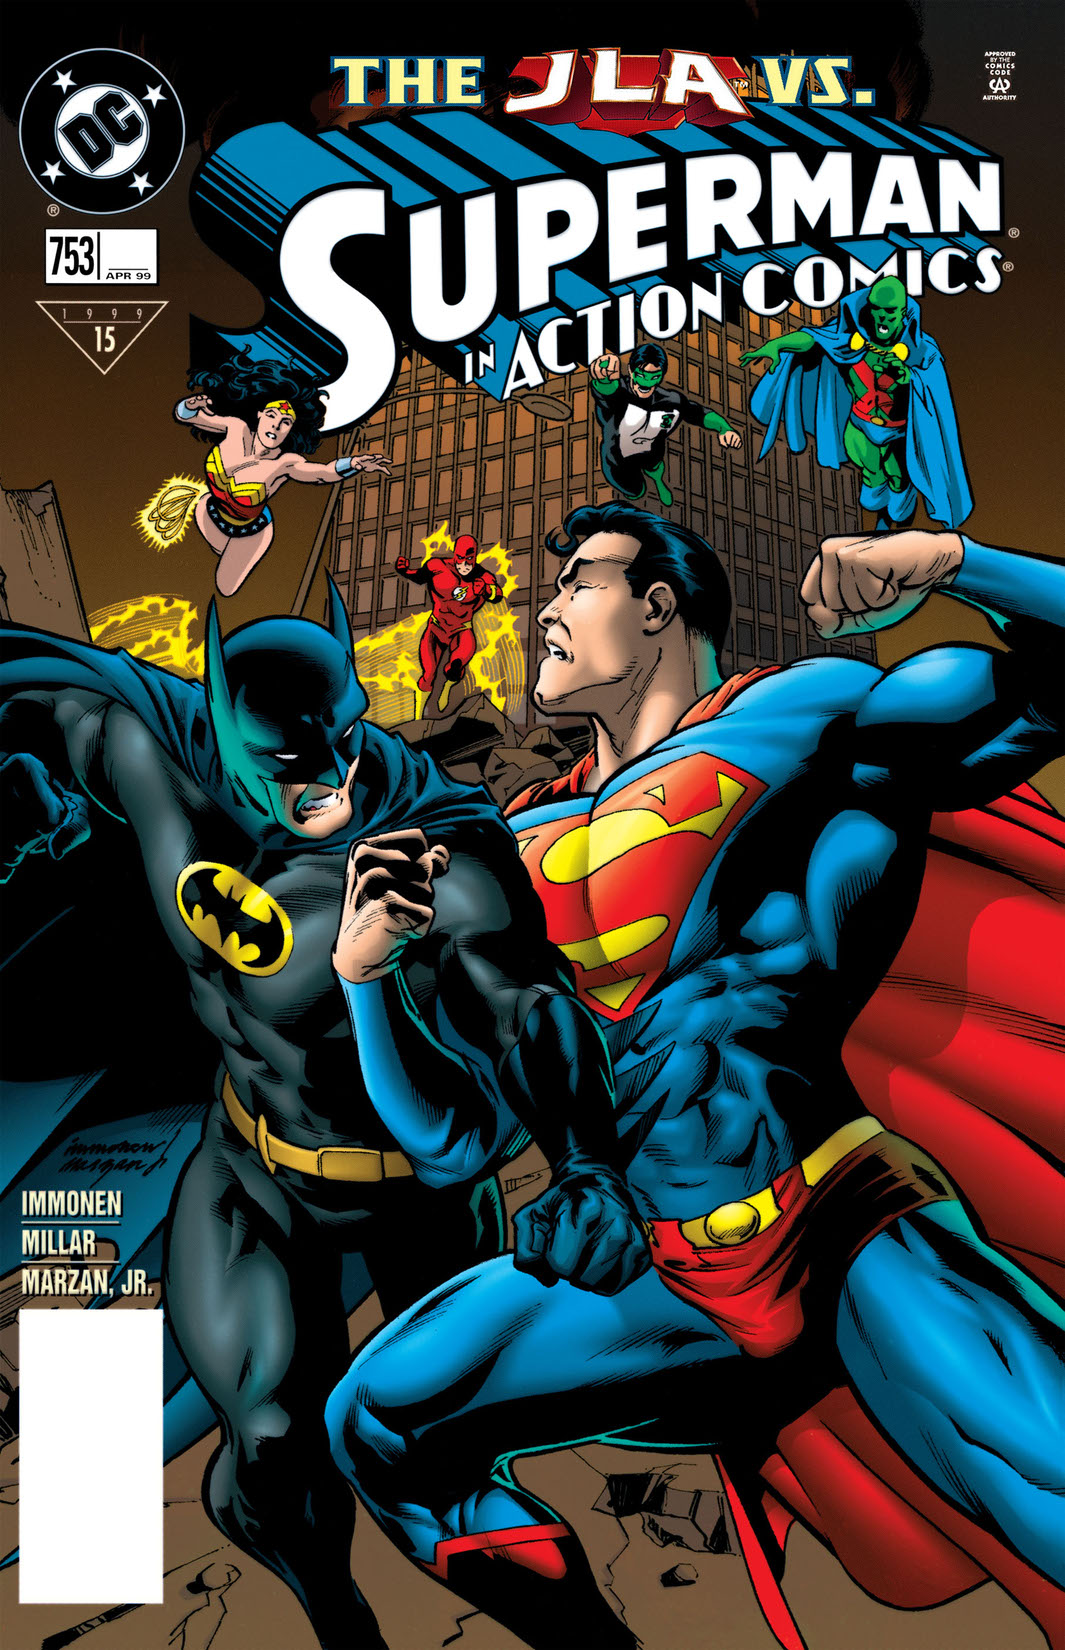 Action Comics (1938-) #753 preview images